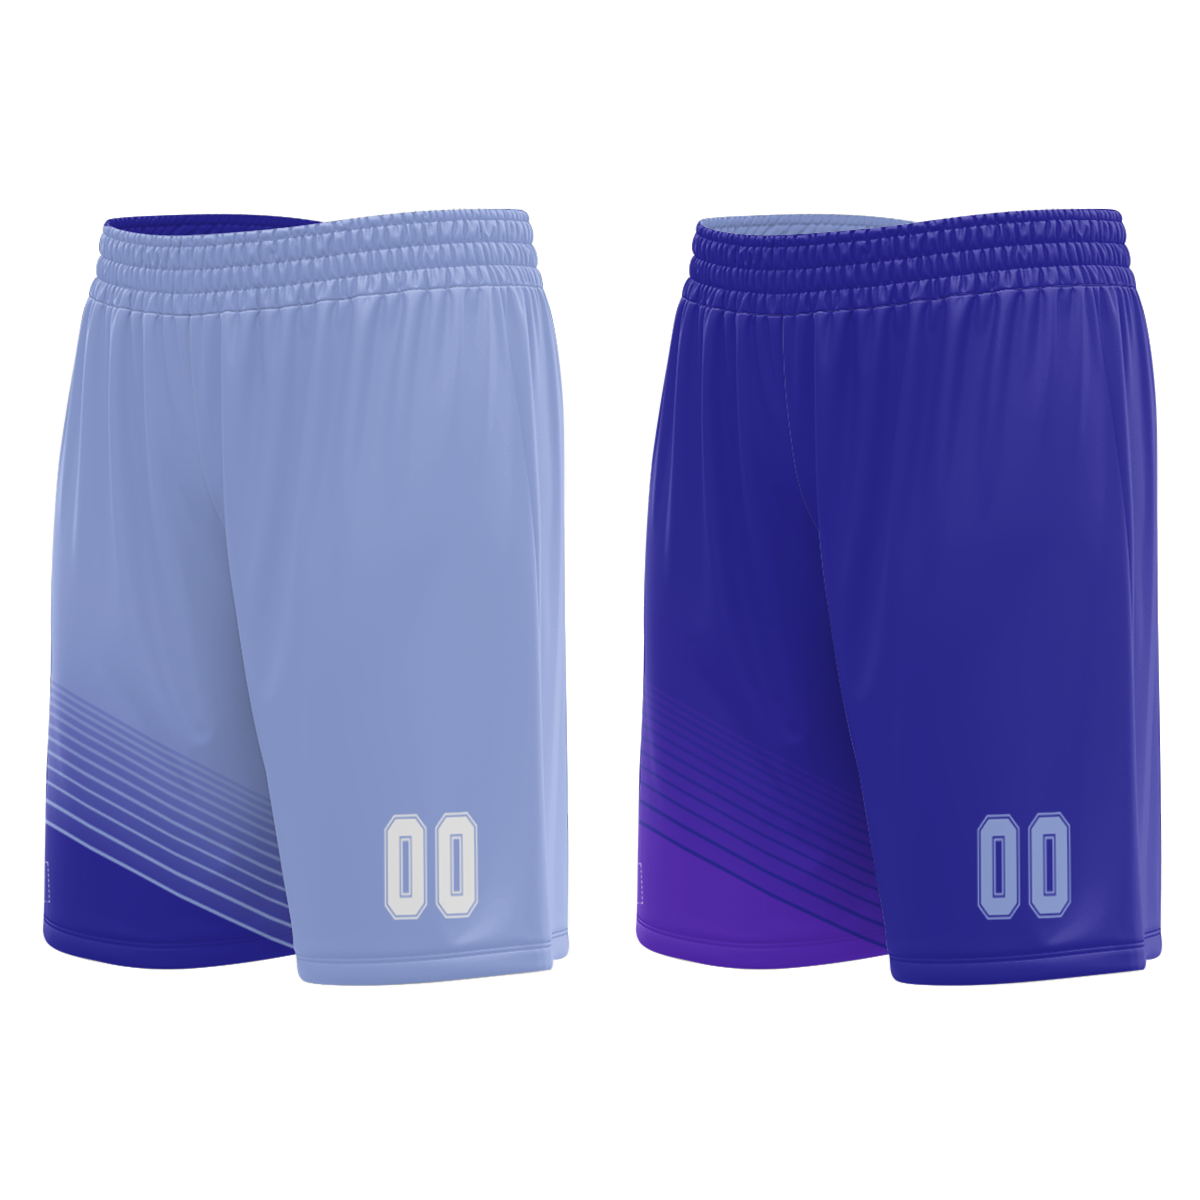 hot-sale-customized-reversible-basketball-jerseys-sublimation-double-layer-basketball-shirt-short-uniforms-at-cj-pod-8